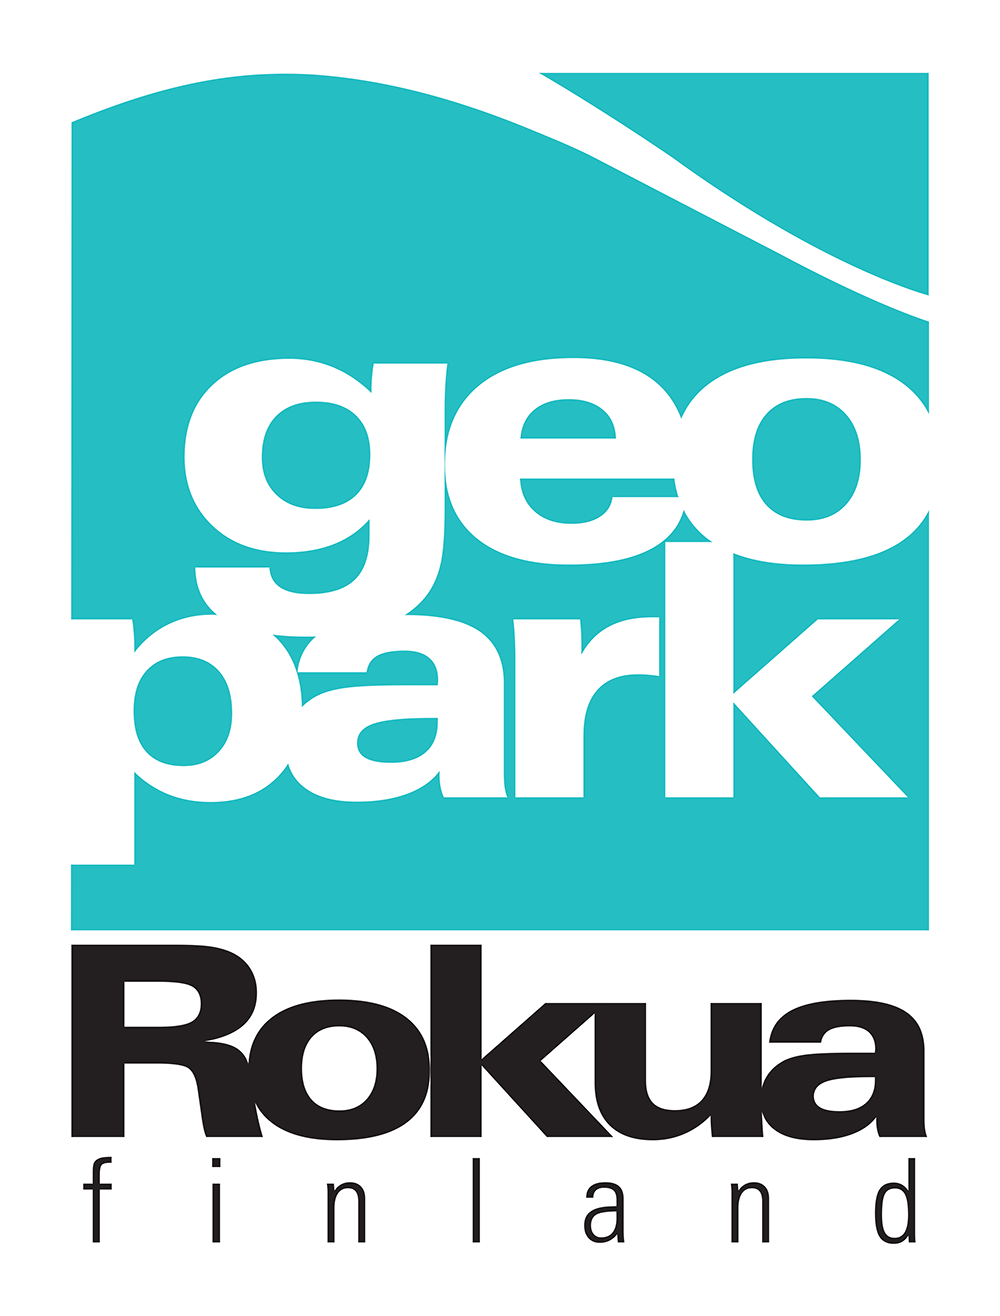 Rokua Geoparkin logo.